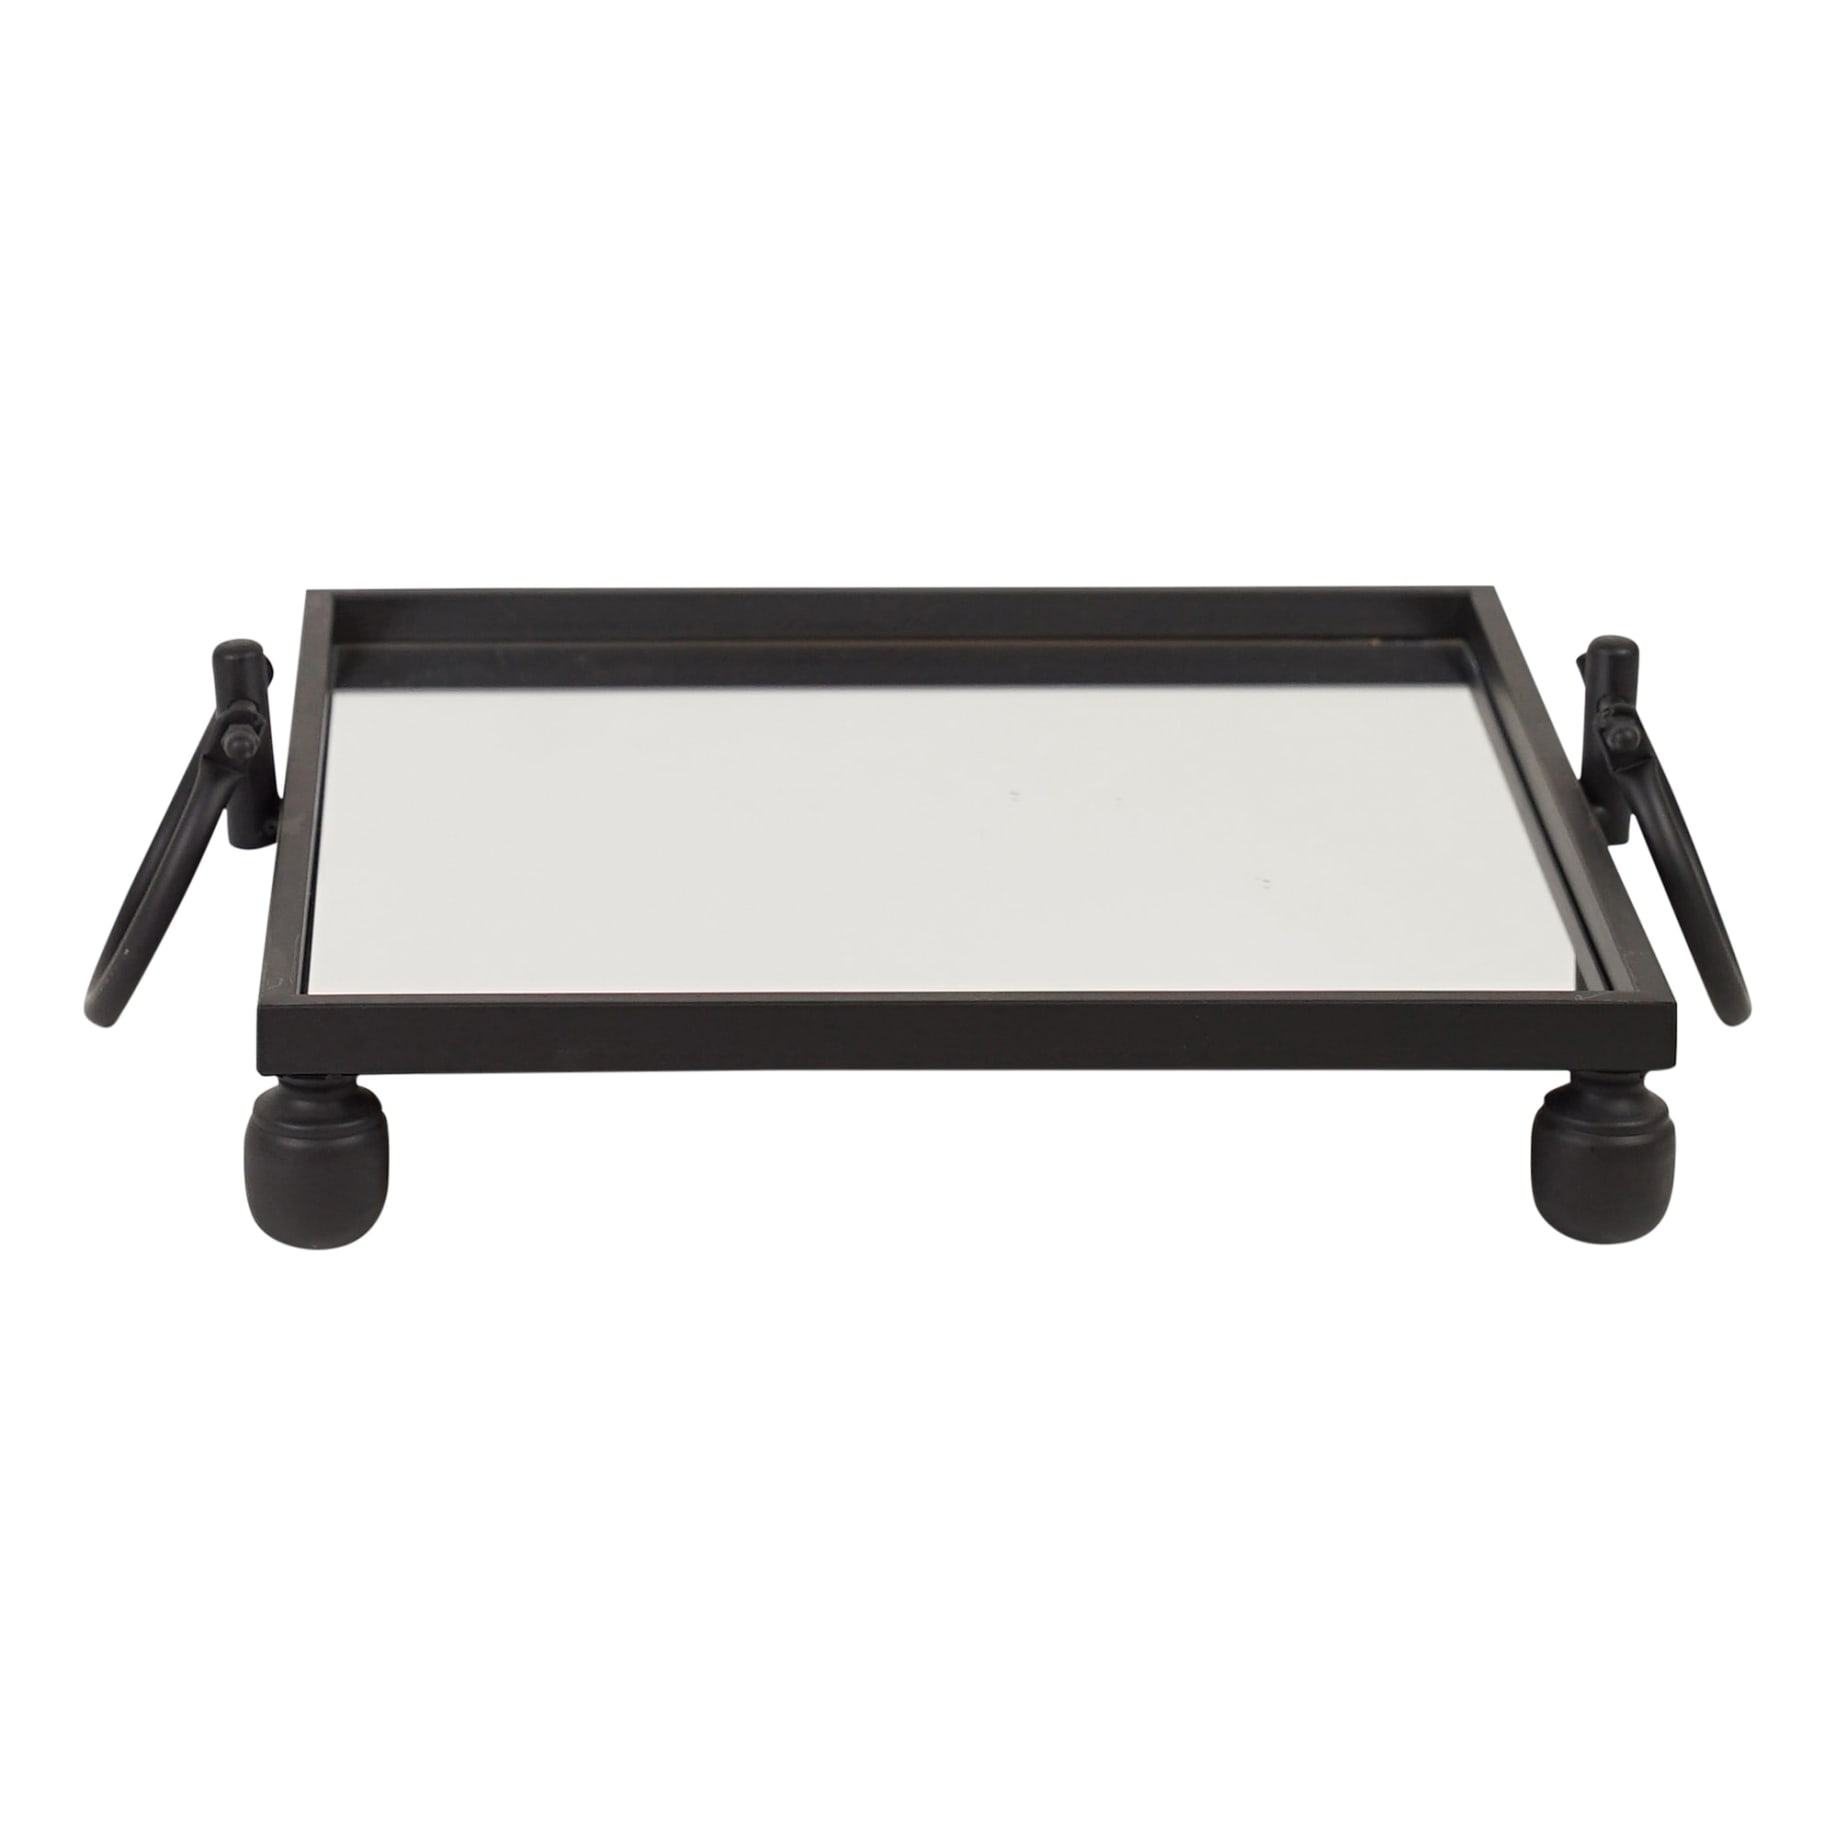 Blair Square Mirror Tray 40.5x11cm in Black